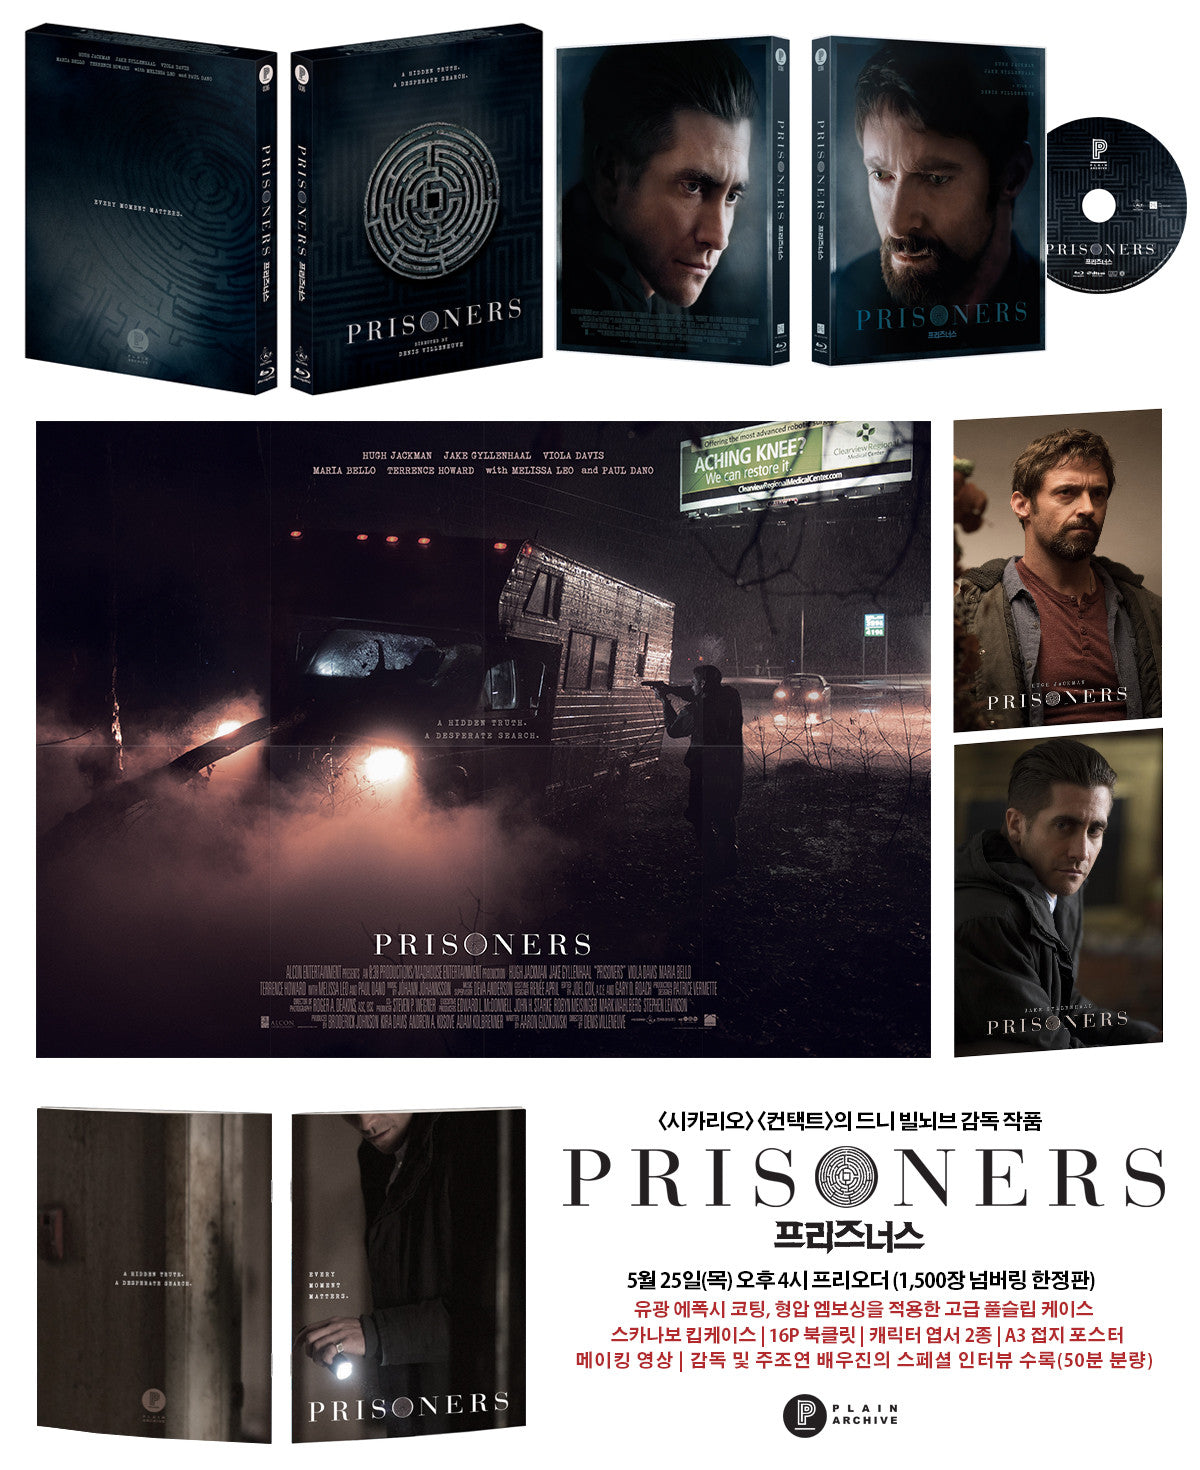 prisoners poster